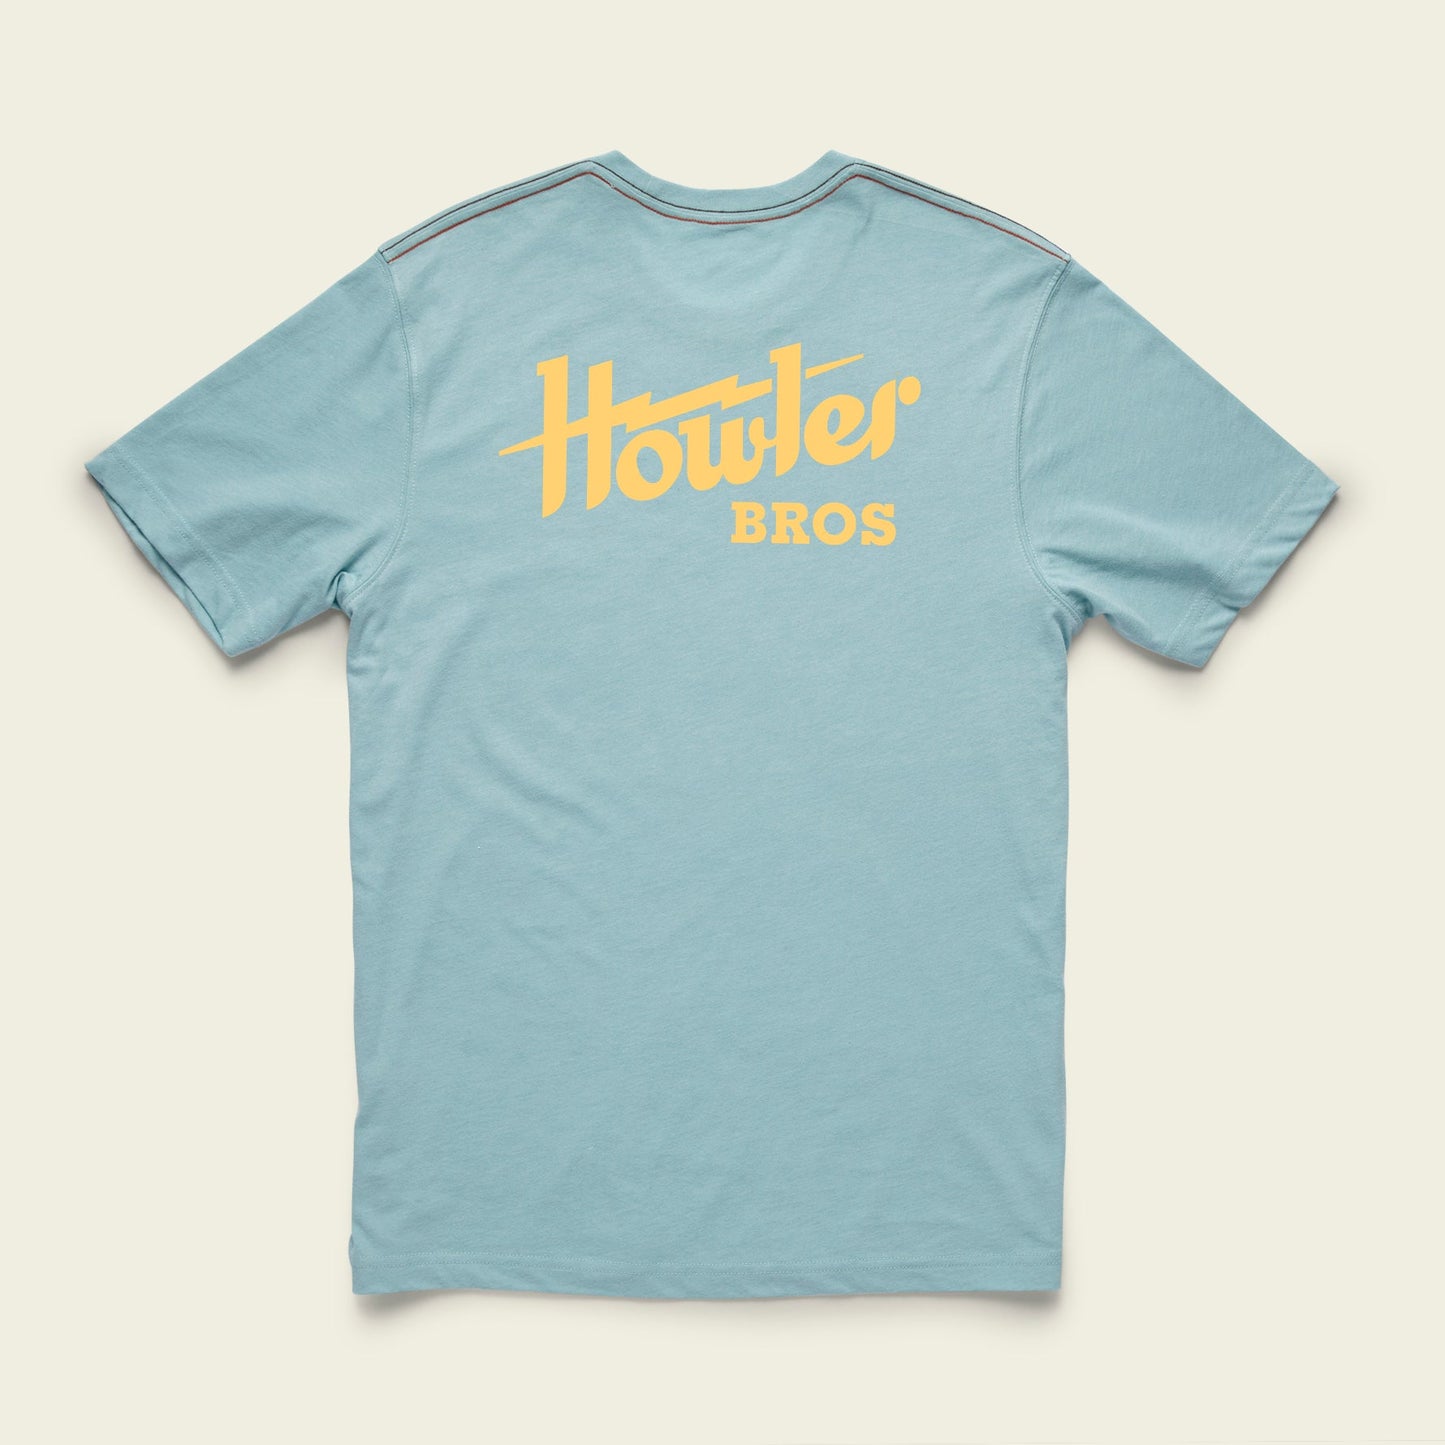 Dual Howler T-Shirt